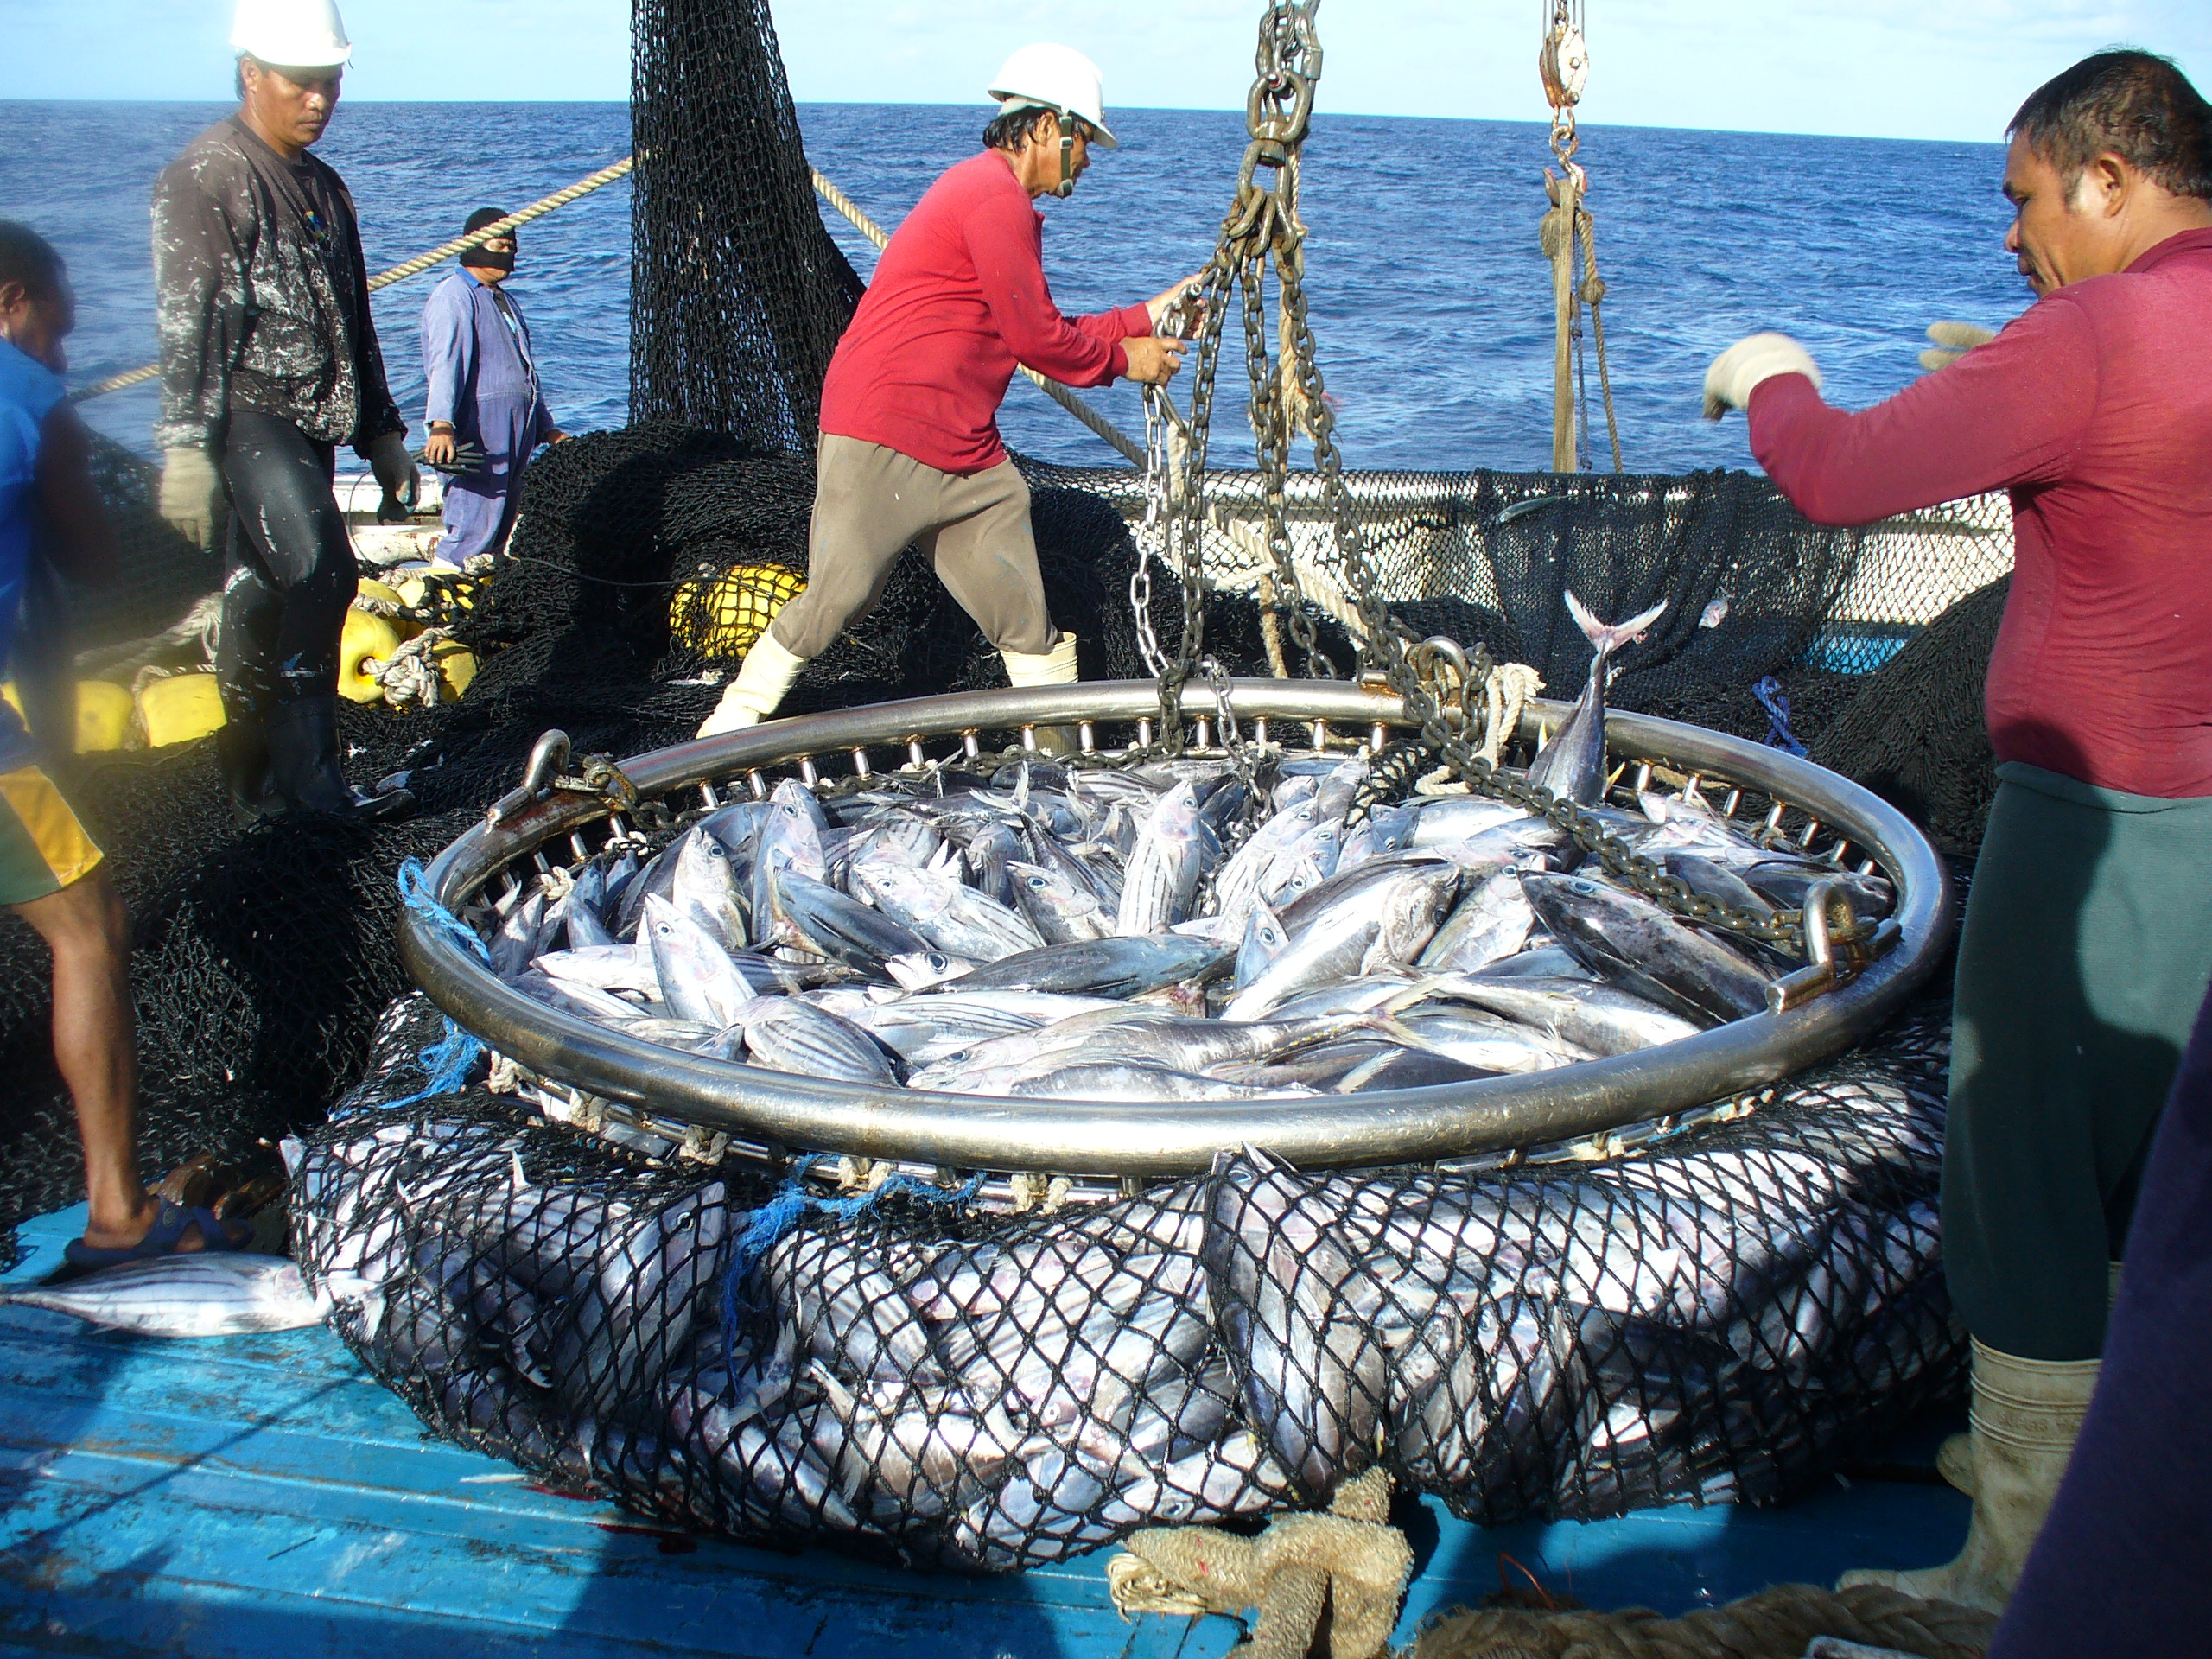 Survey shows focus on tuna stocks